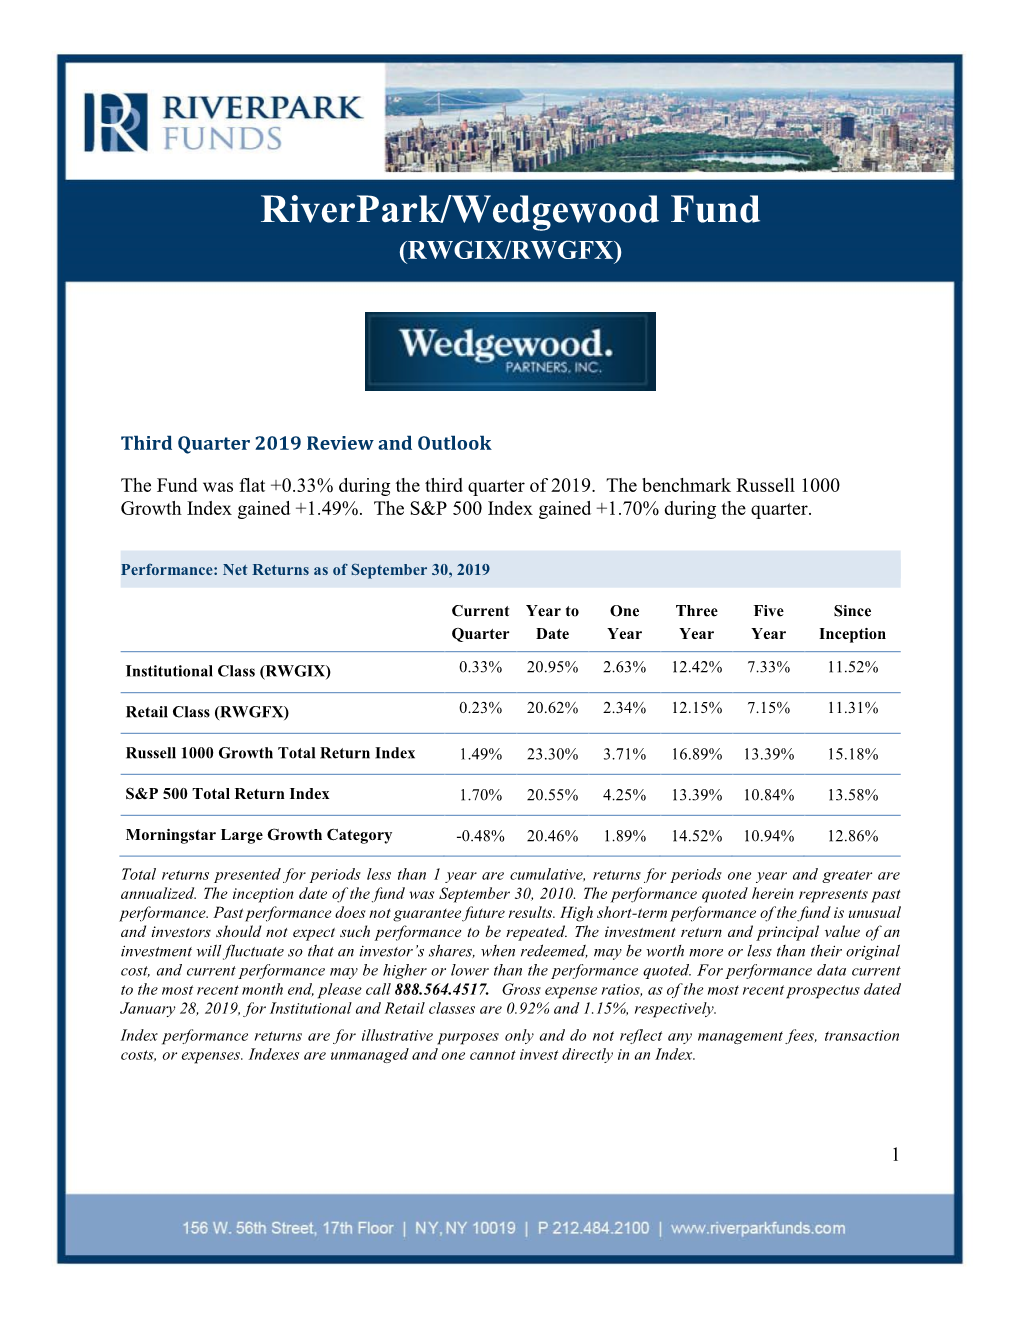 Riverpark/Wedgewood Fund (RWGIX/RWGFX)